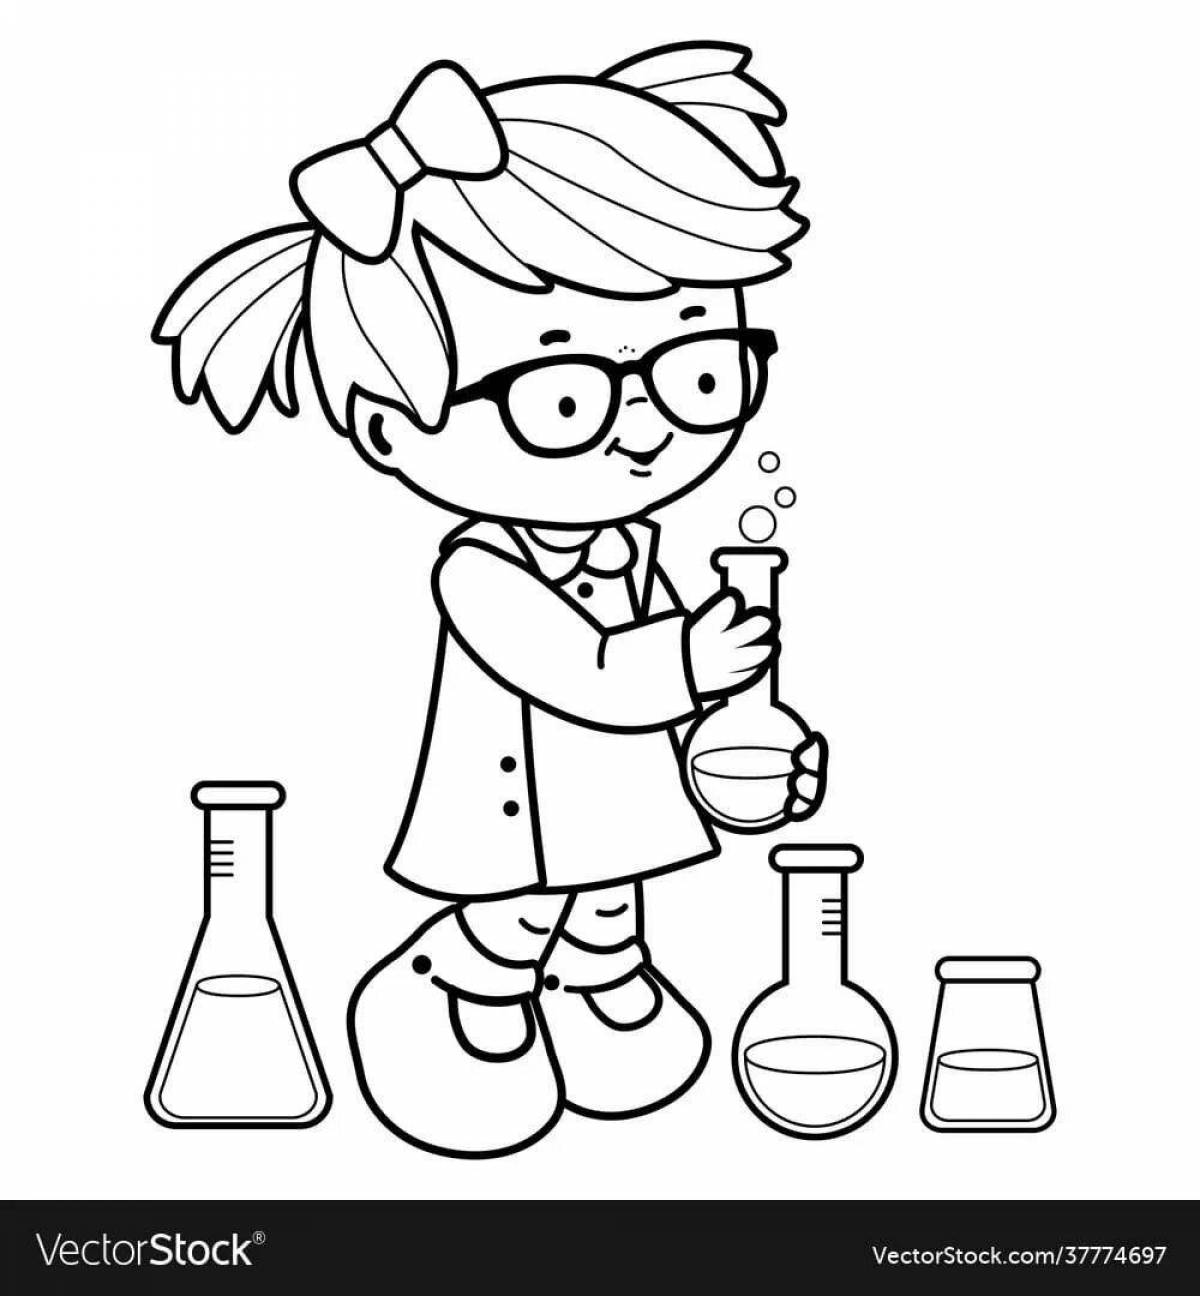 Chemist #2